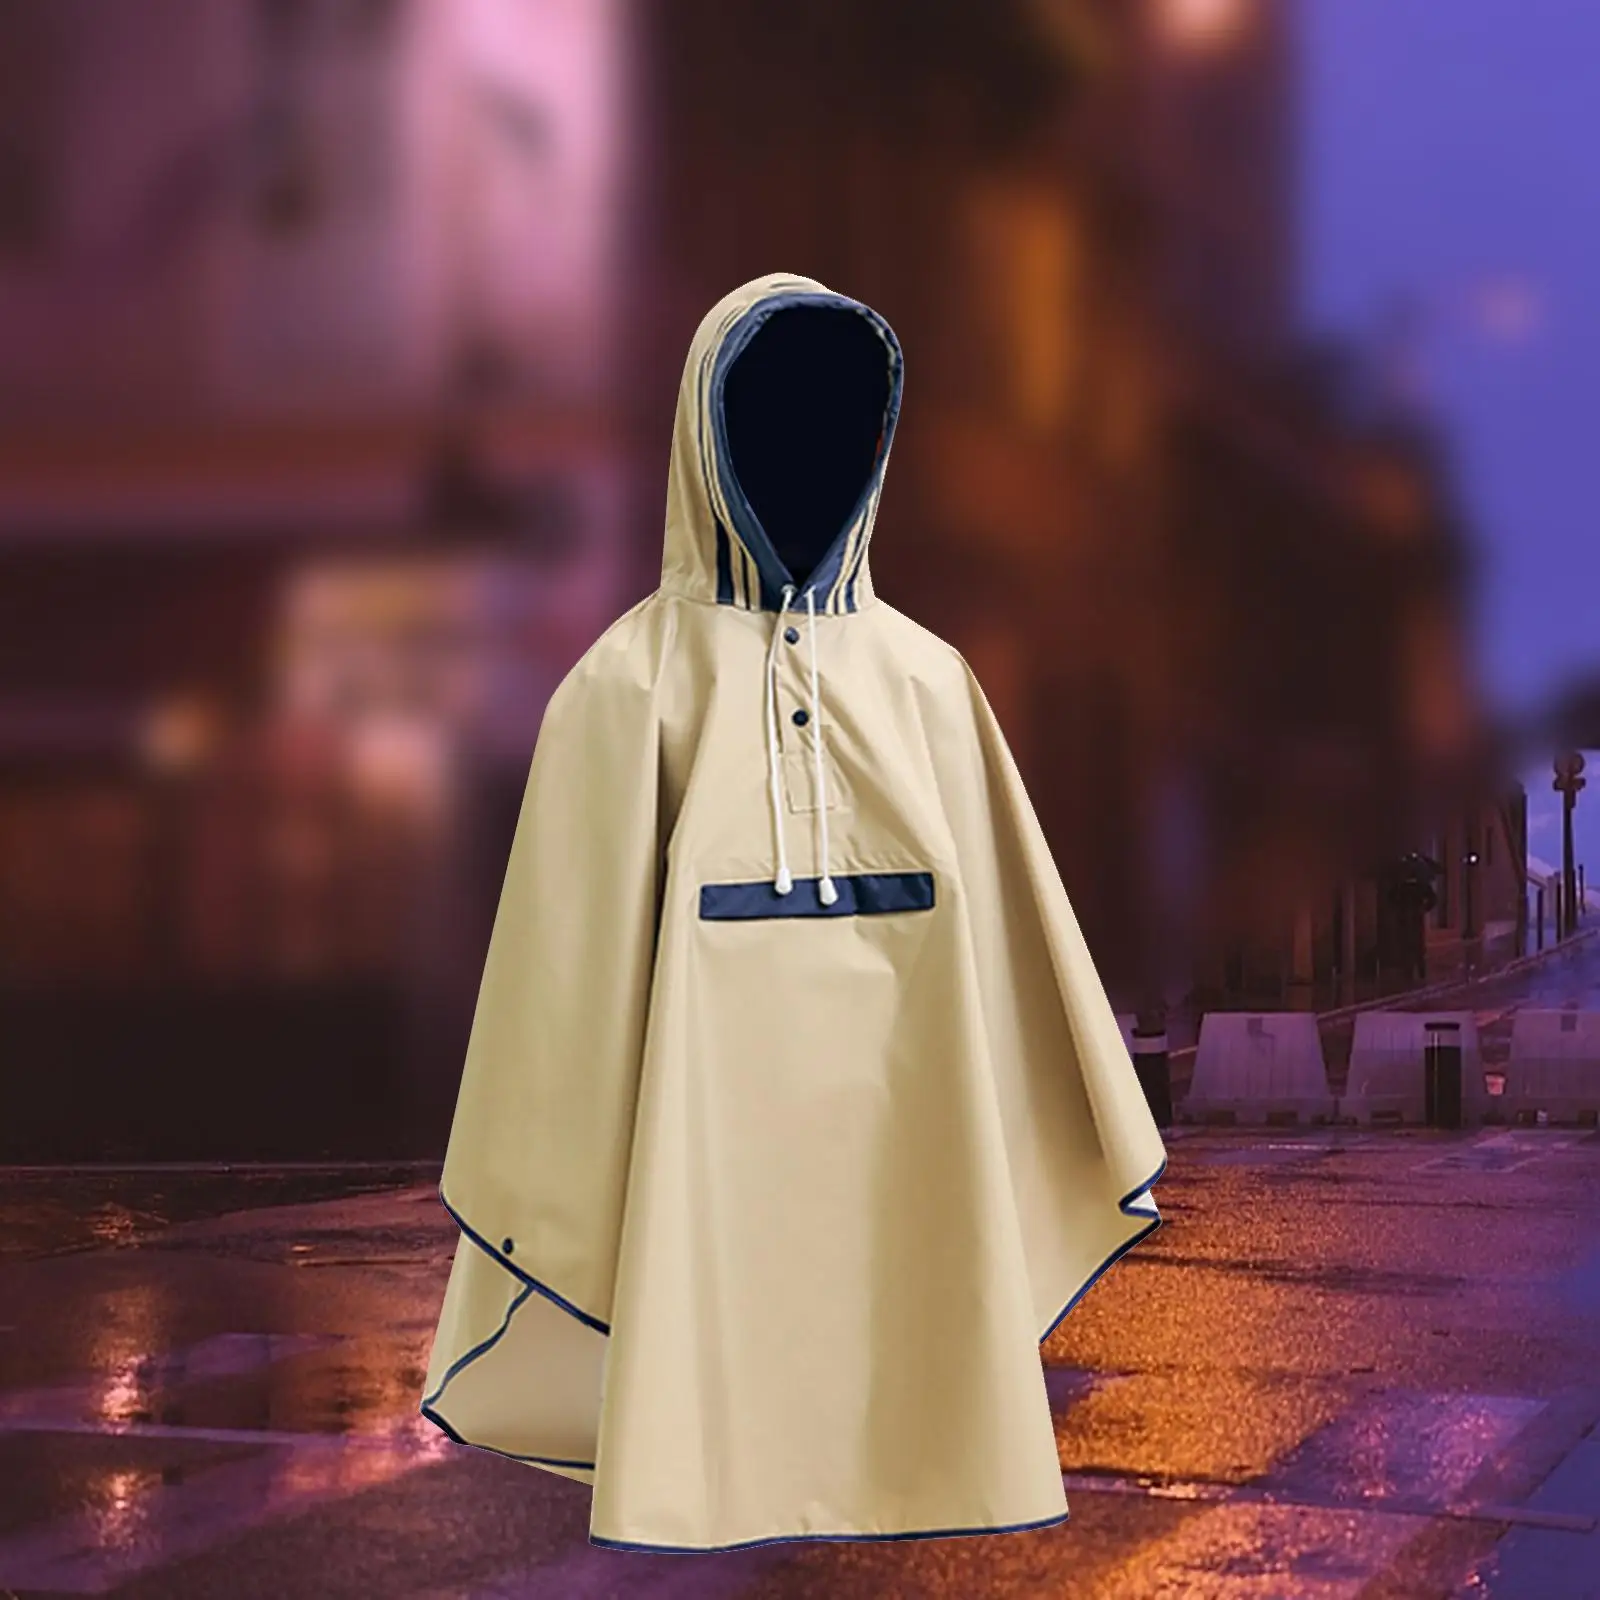 Adults Poncho Waterproof Rain Jacket Impermeable Rain Protection Long Sleeve Outwear Reusable Raincoat for Men Women Hiking Tour